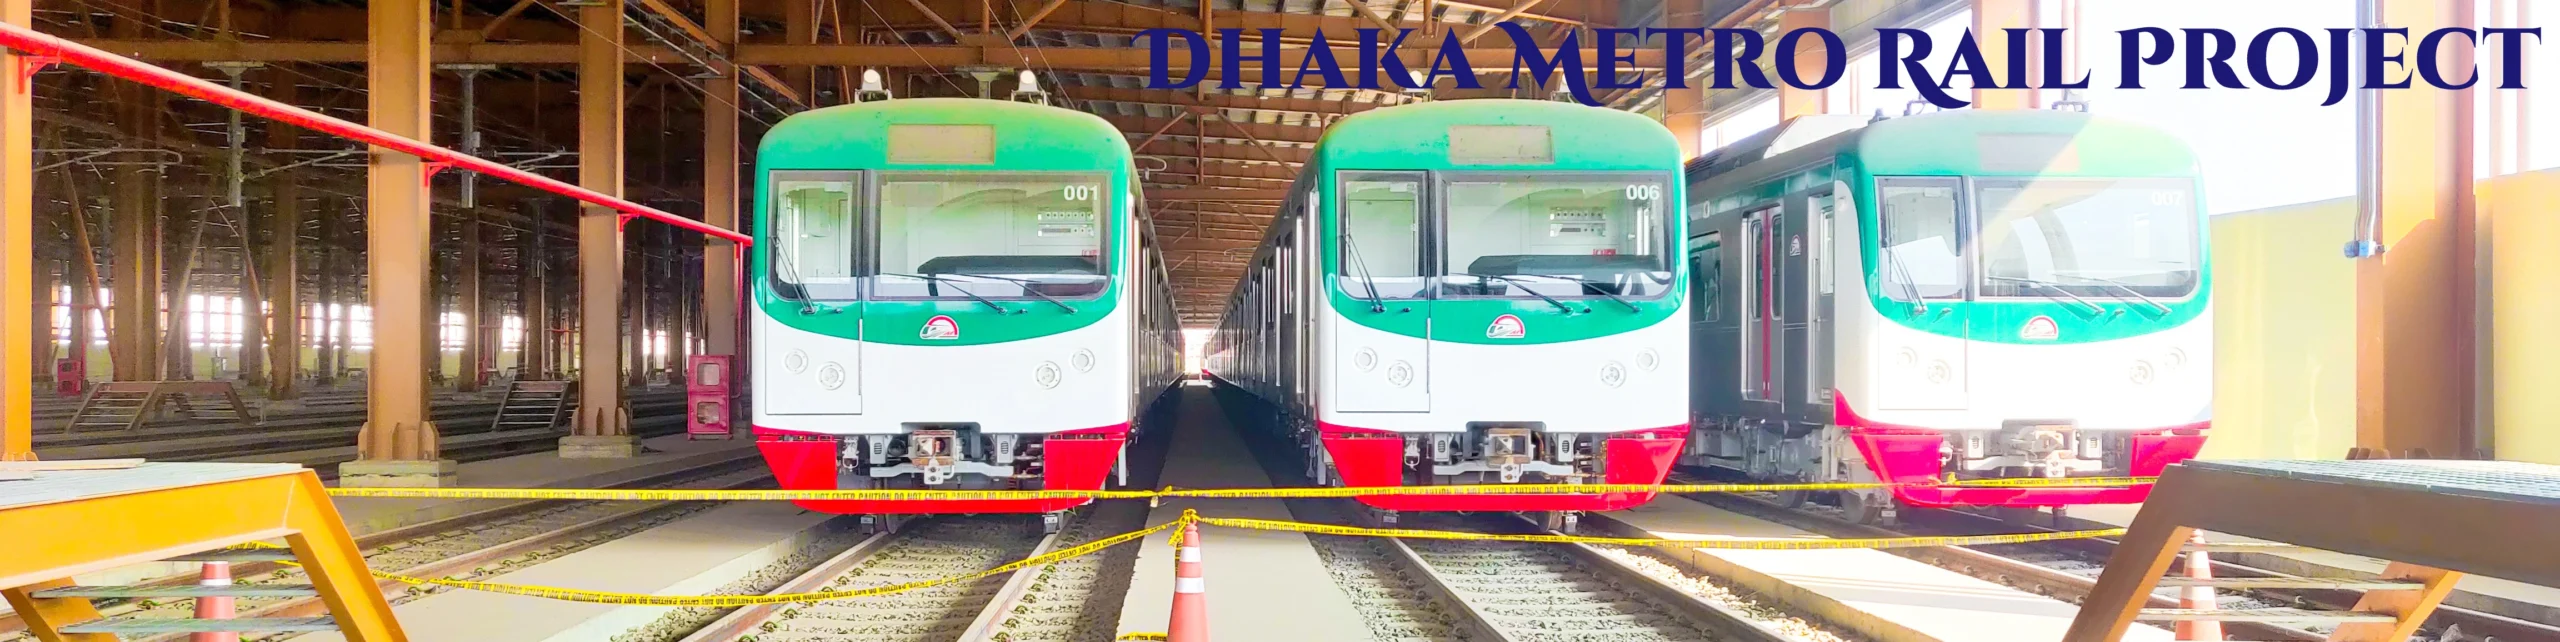 Dhaka Metro Rail Project-1